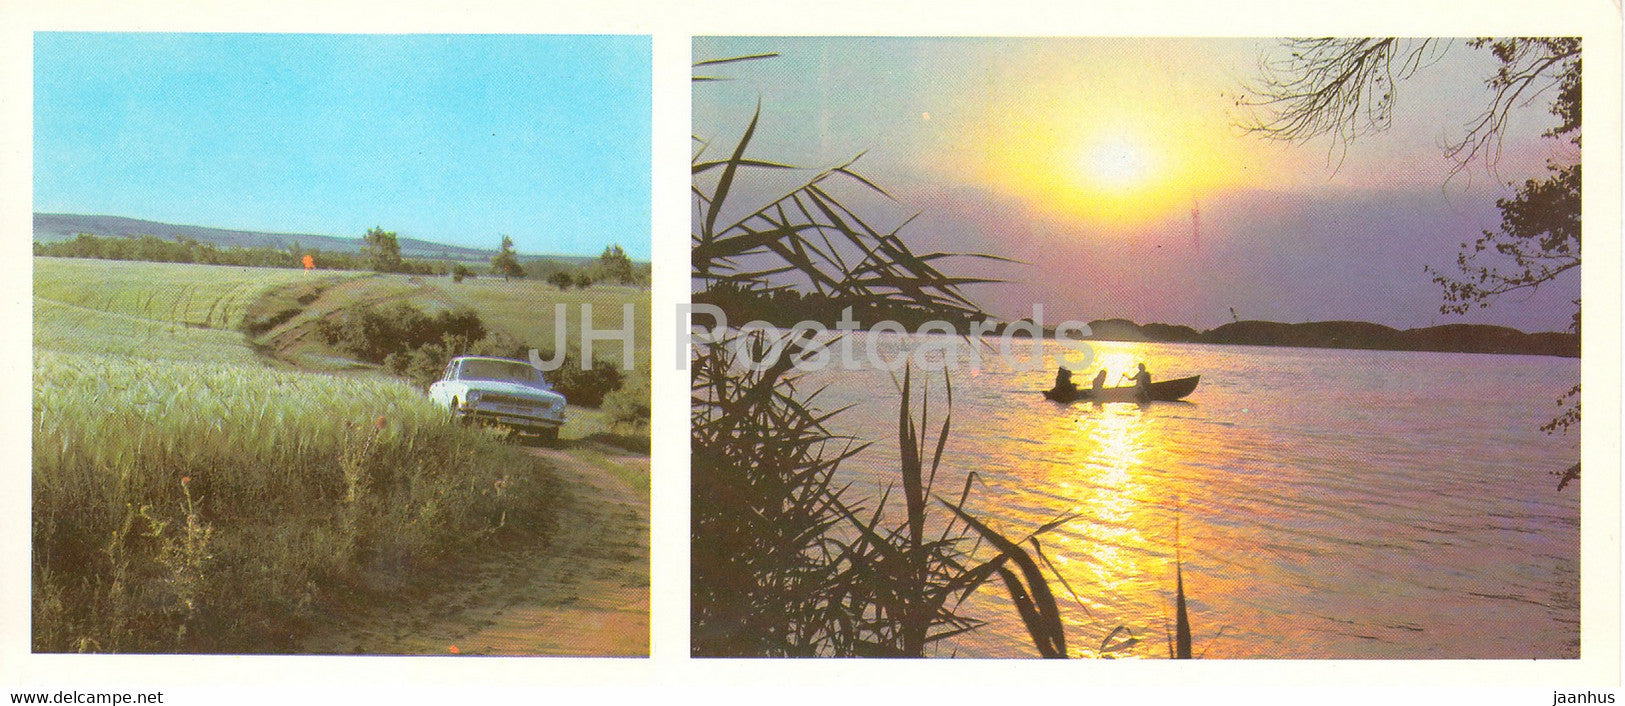 Stavropol area - Stavropolye - grain fields of the region - car Volga - 1985 - Russia USSR - unused - JH Postcards